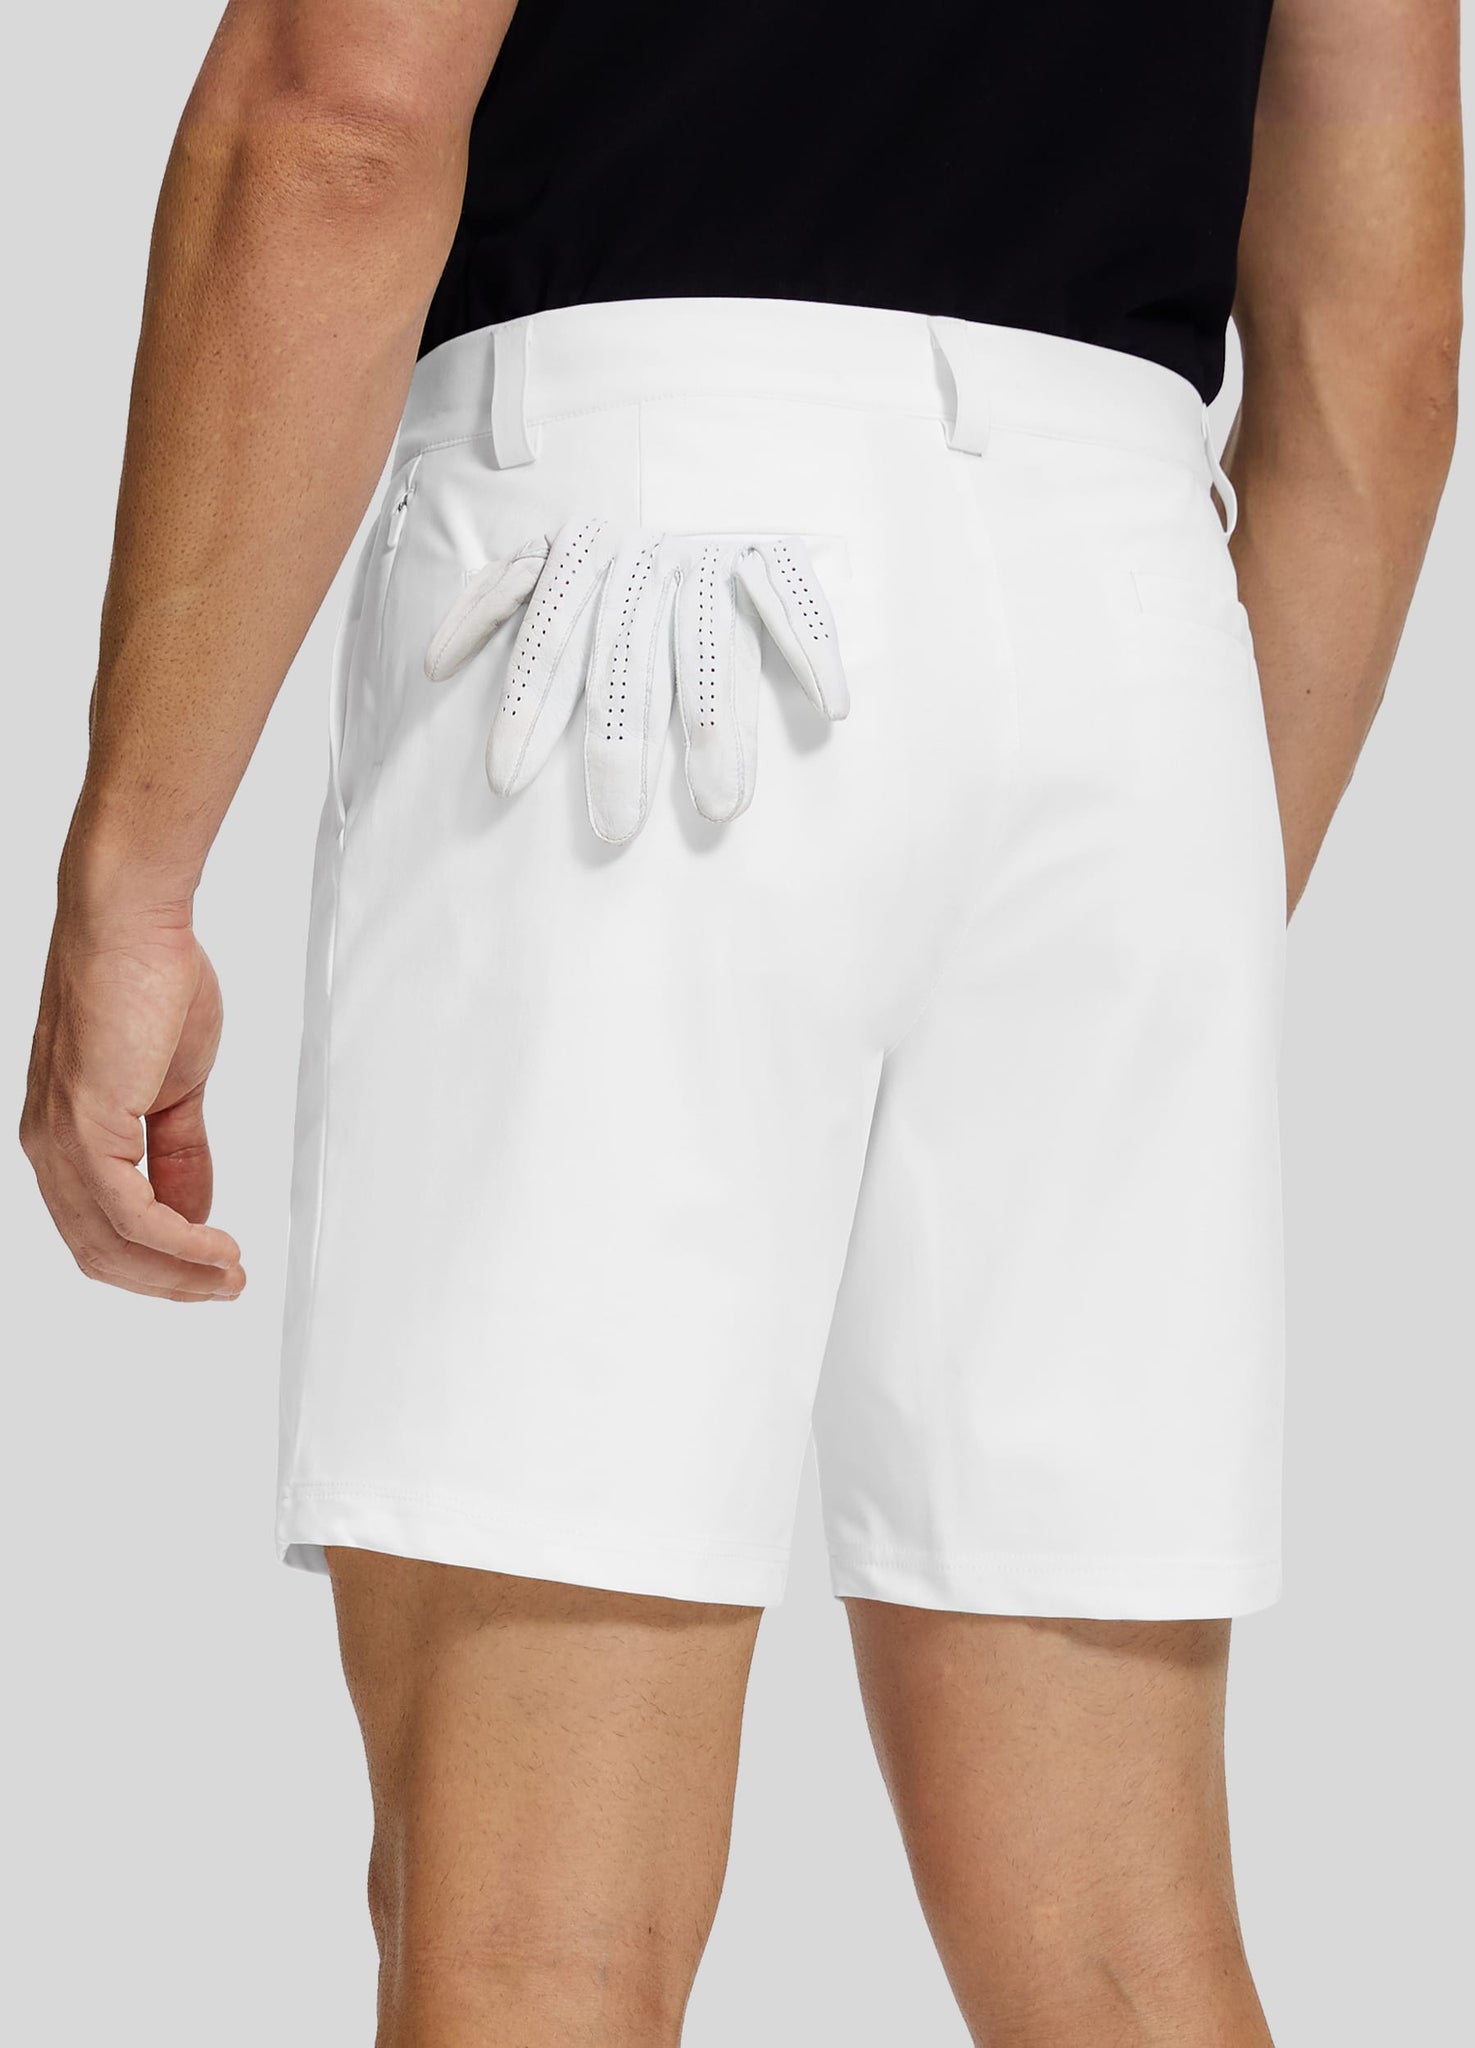 Men's Casual Golf Shorts 7 Inch